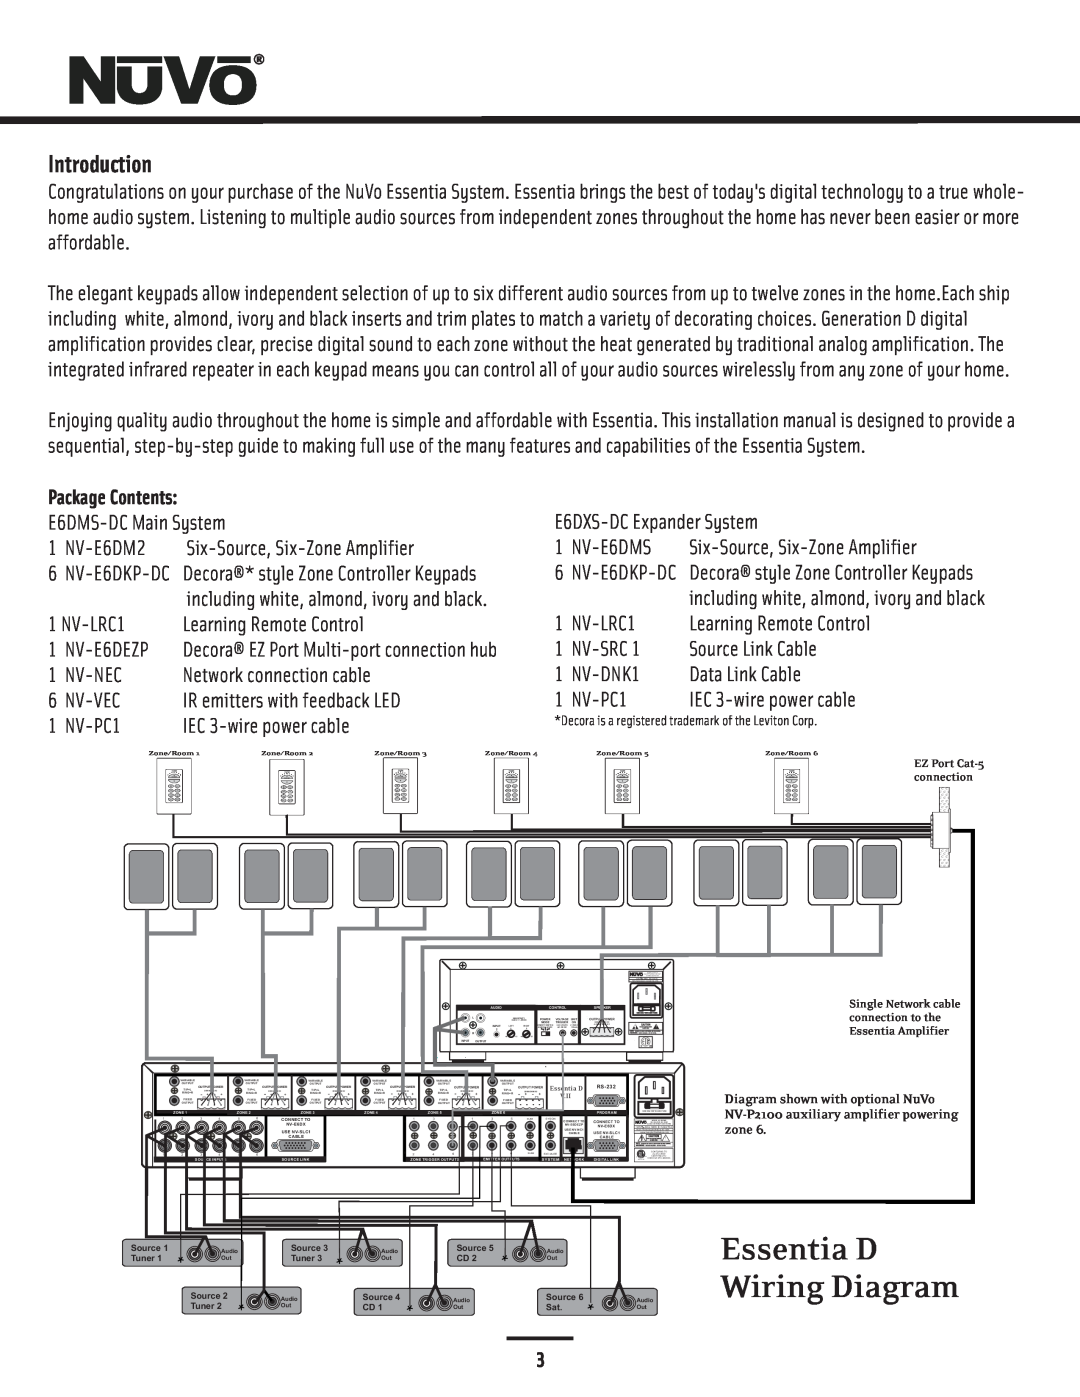 Nuvo NV-E6DMS-DC, NV-E6DXS-DC manual Introduction, Essentia D Wiring Diagram 